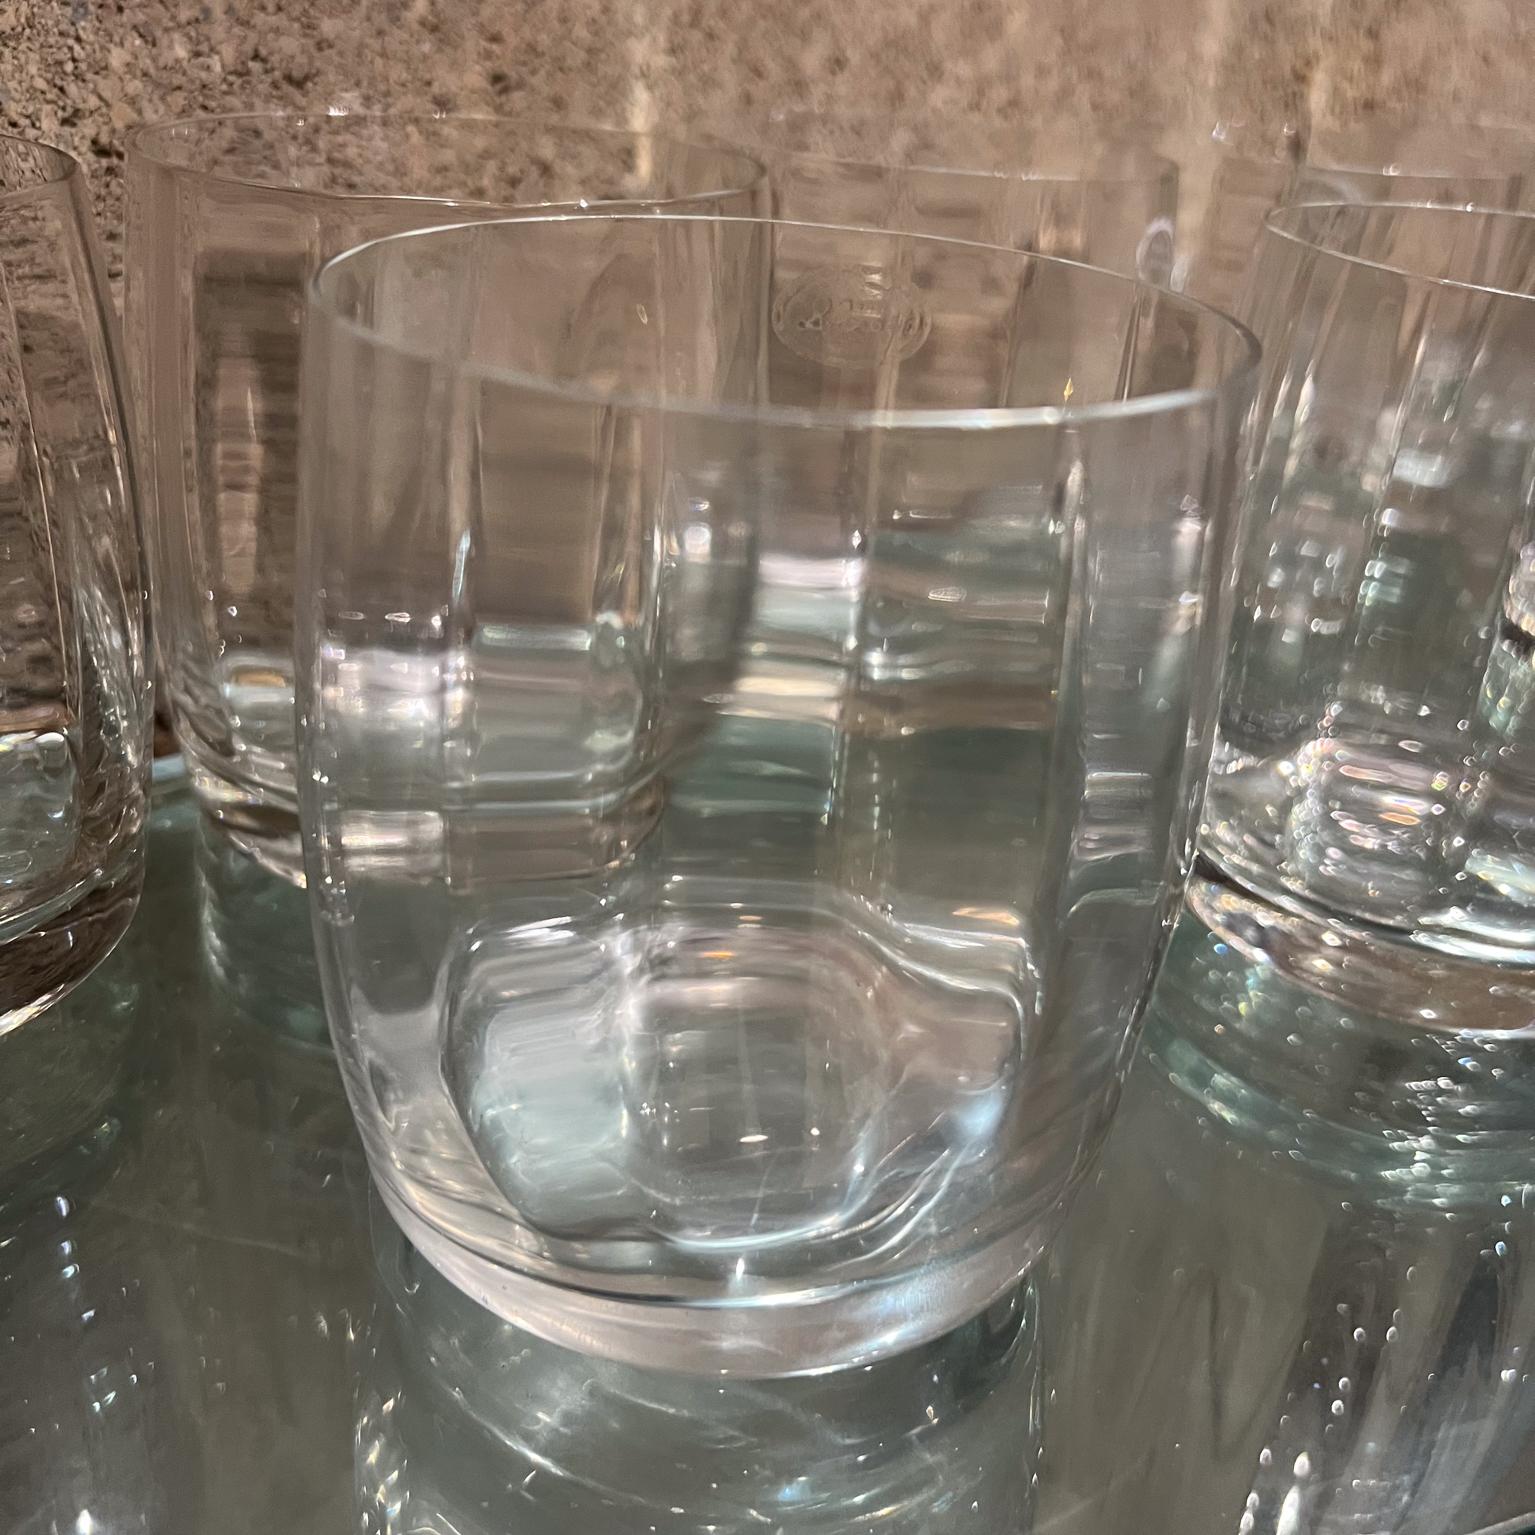 Vintage Drinkware Set of 8 Glasses
4 h x 3.25
Stamped Yugoslavia
Original Vintage Condition
Refer to images